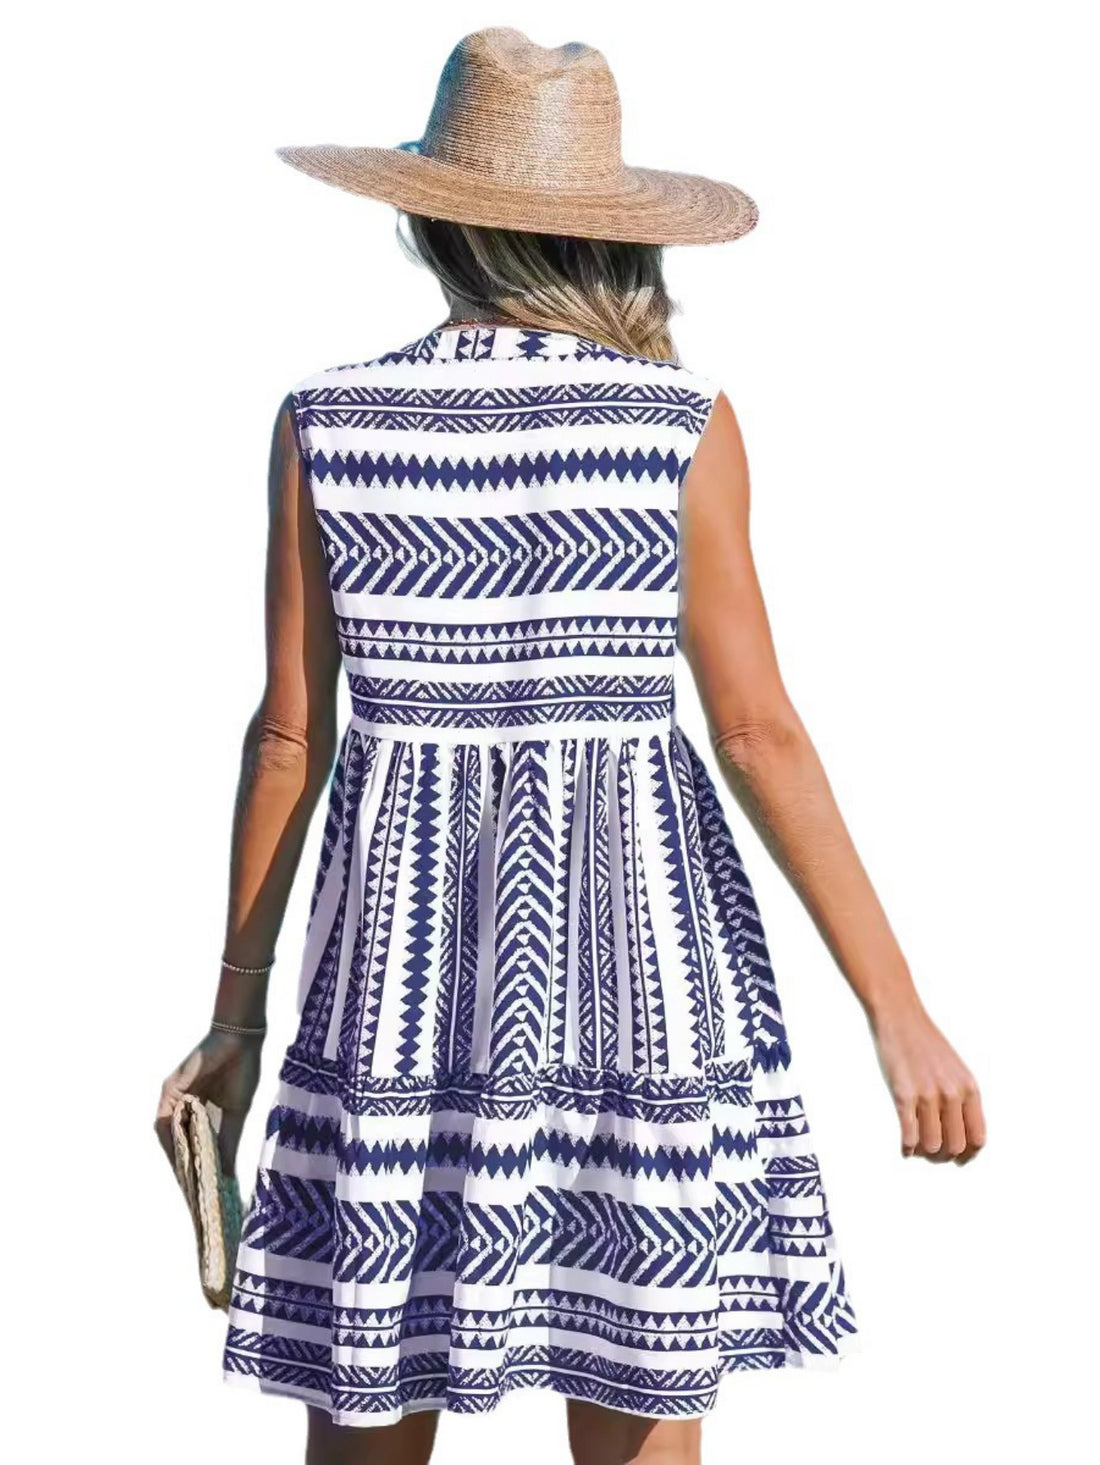 Flattering Tribal Print Notch Neck Tank Dress - Flowy & Comfortable Sleeveless Style